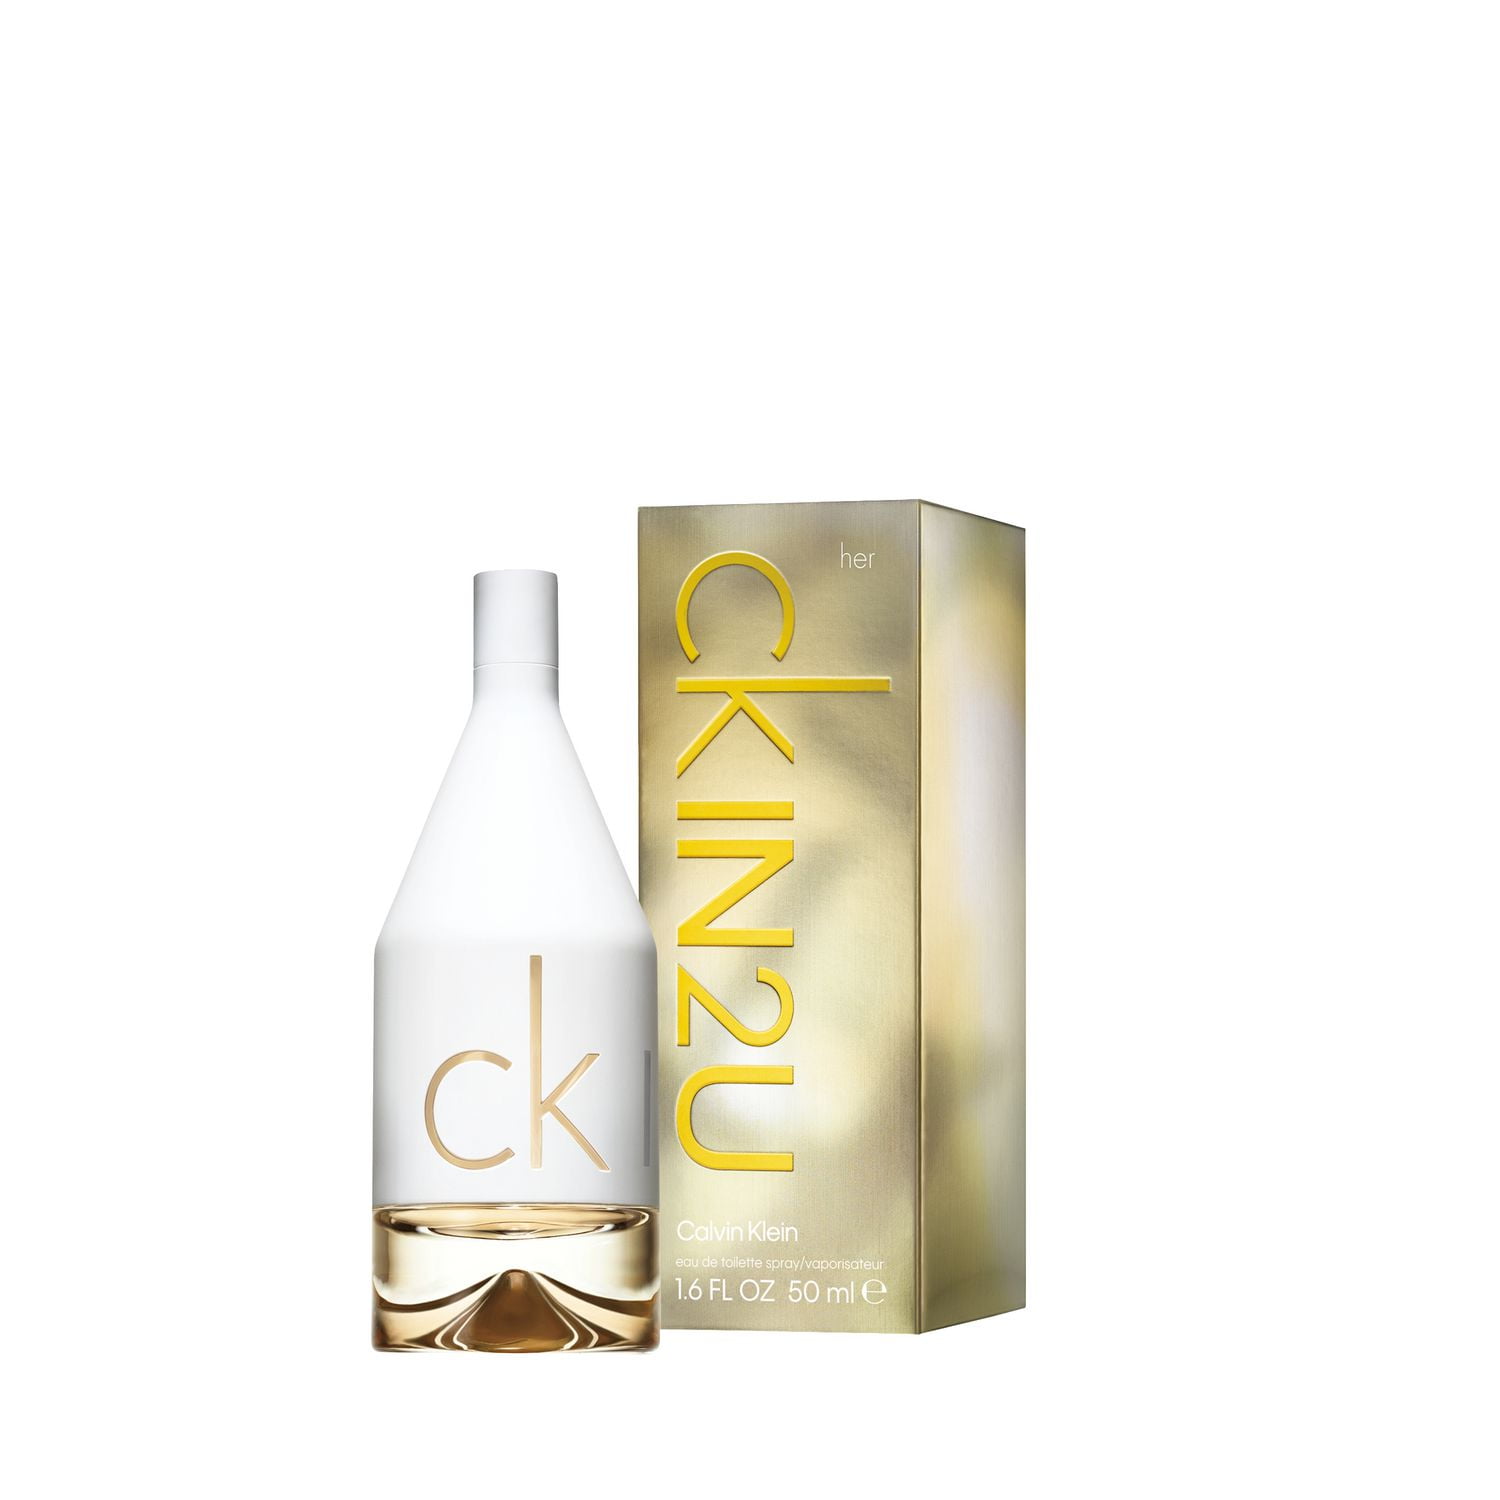 Ck In 2u by Calvin Klein - Buy online